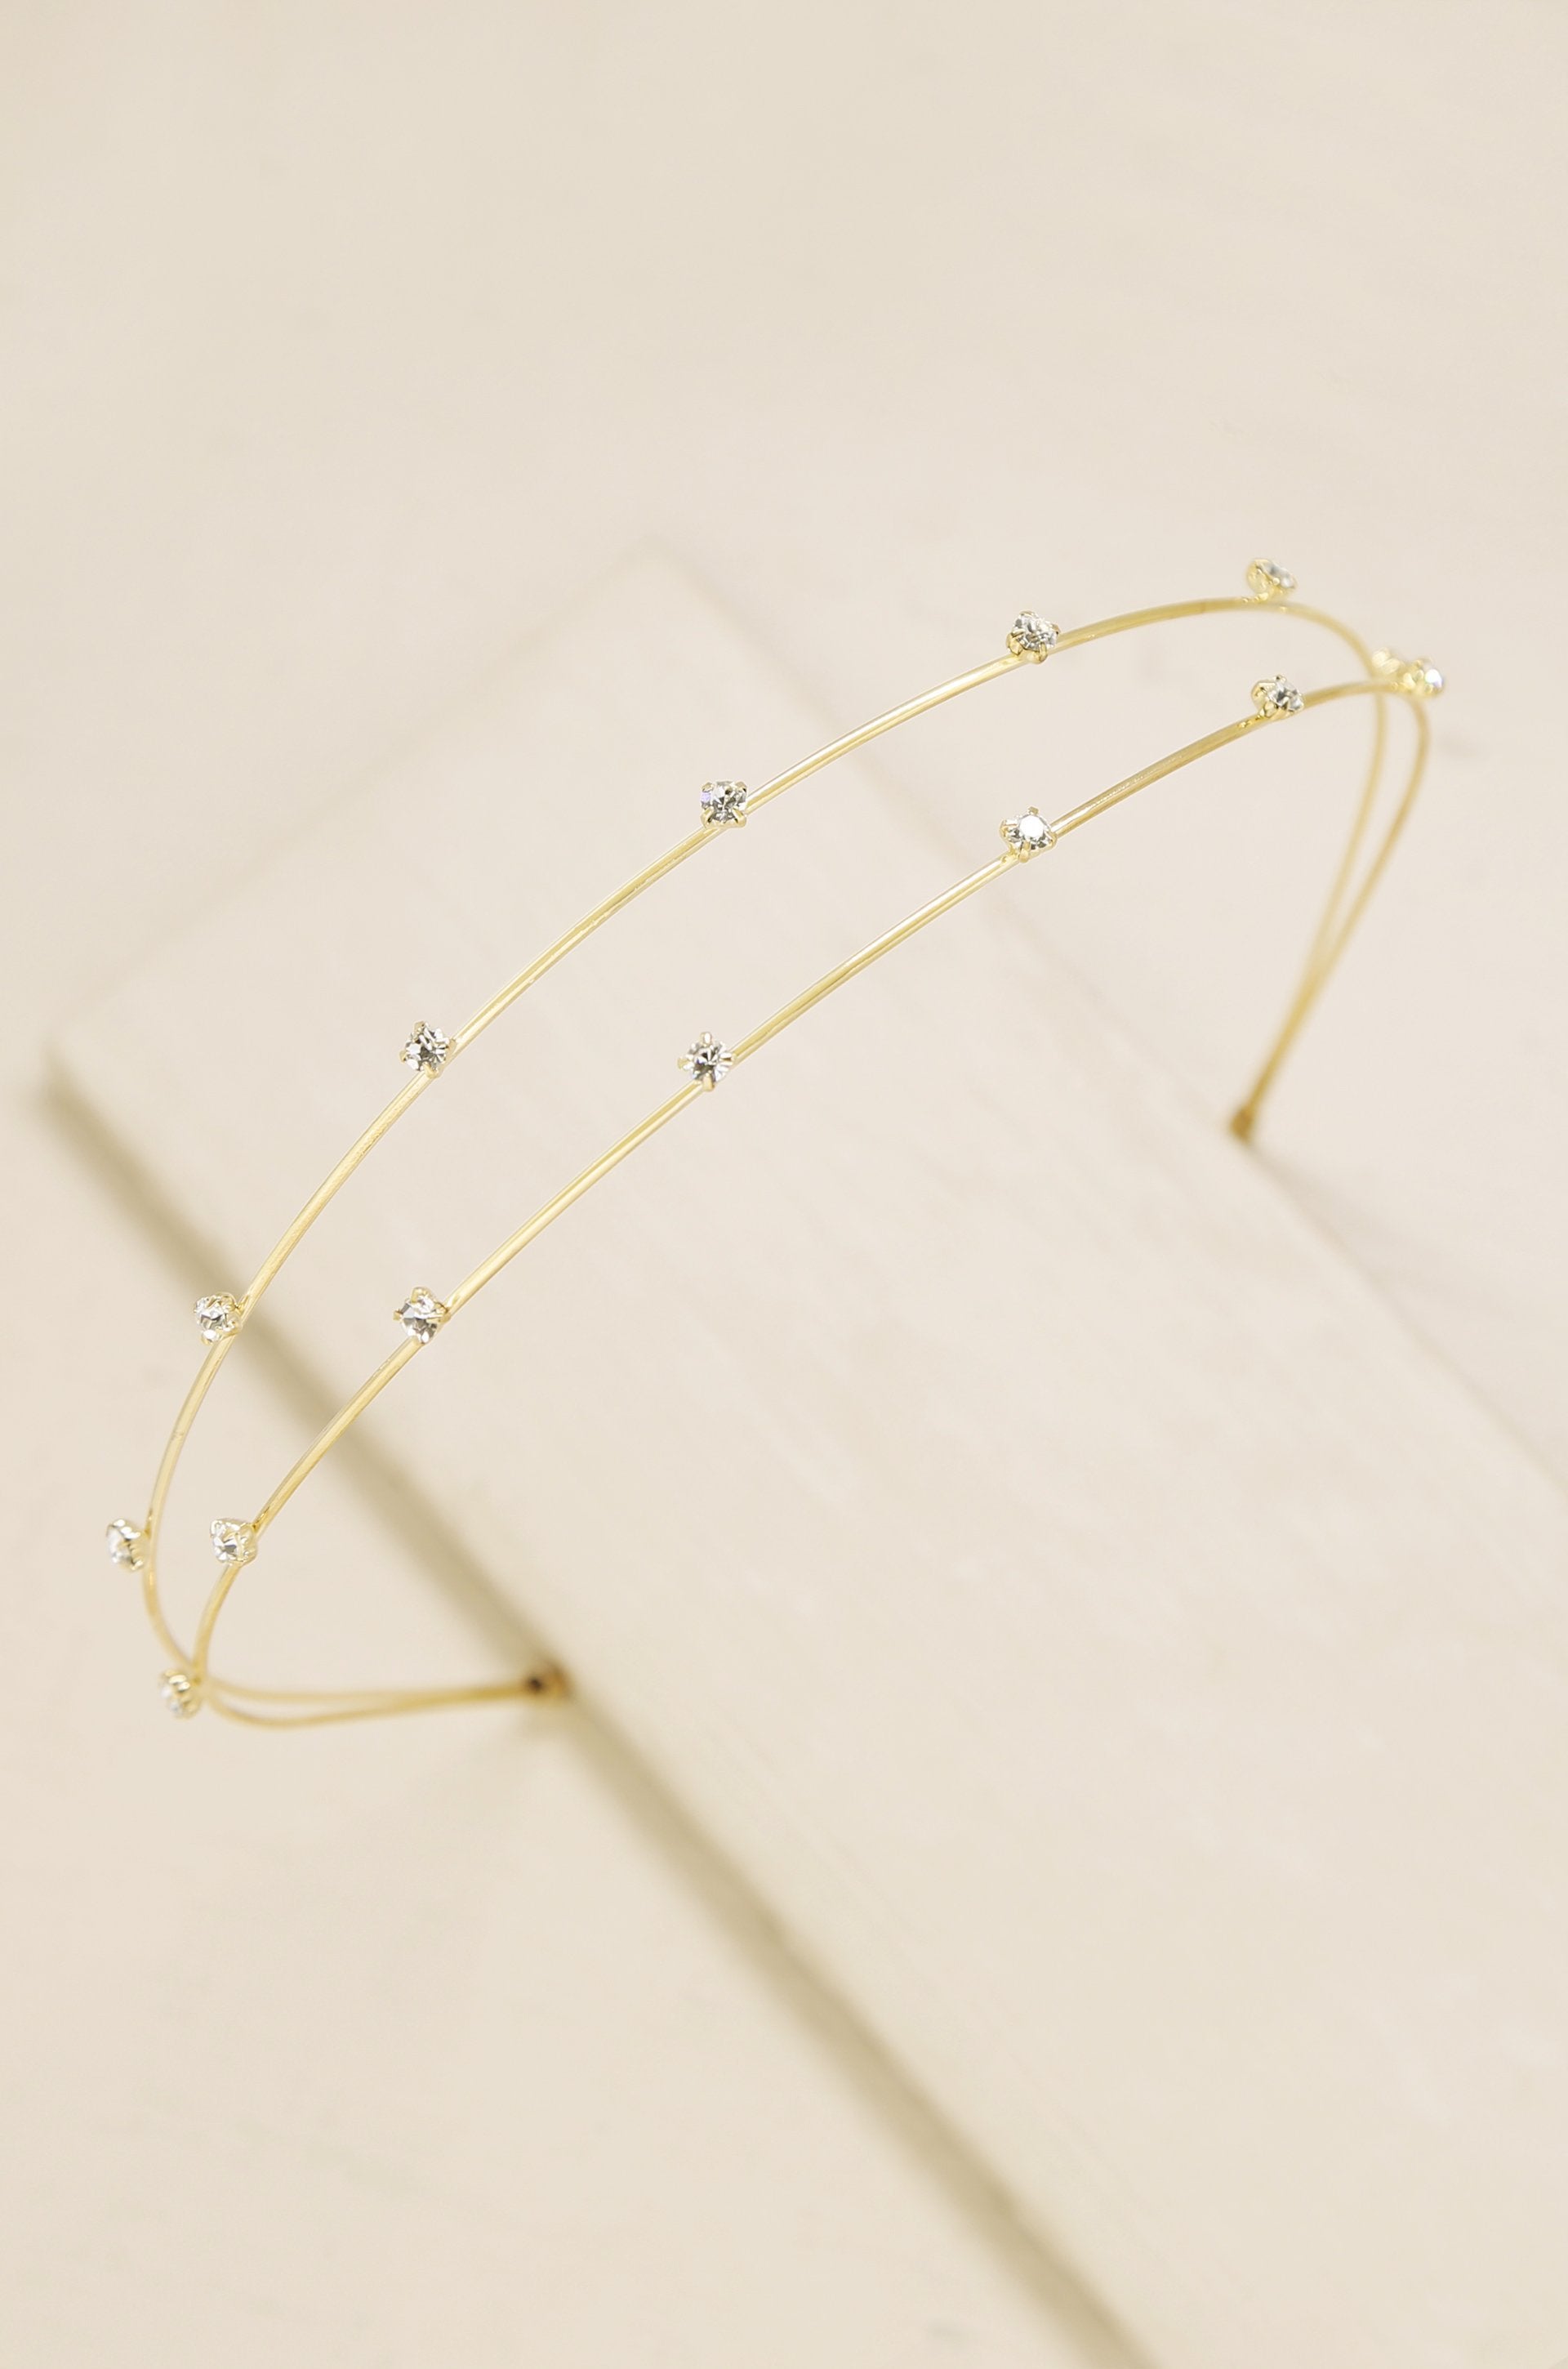 bandeau femme coton léopard - Easy Headband gold Barts : Headict